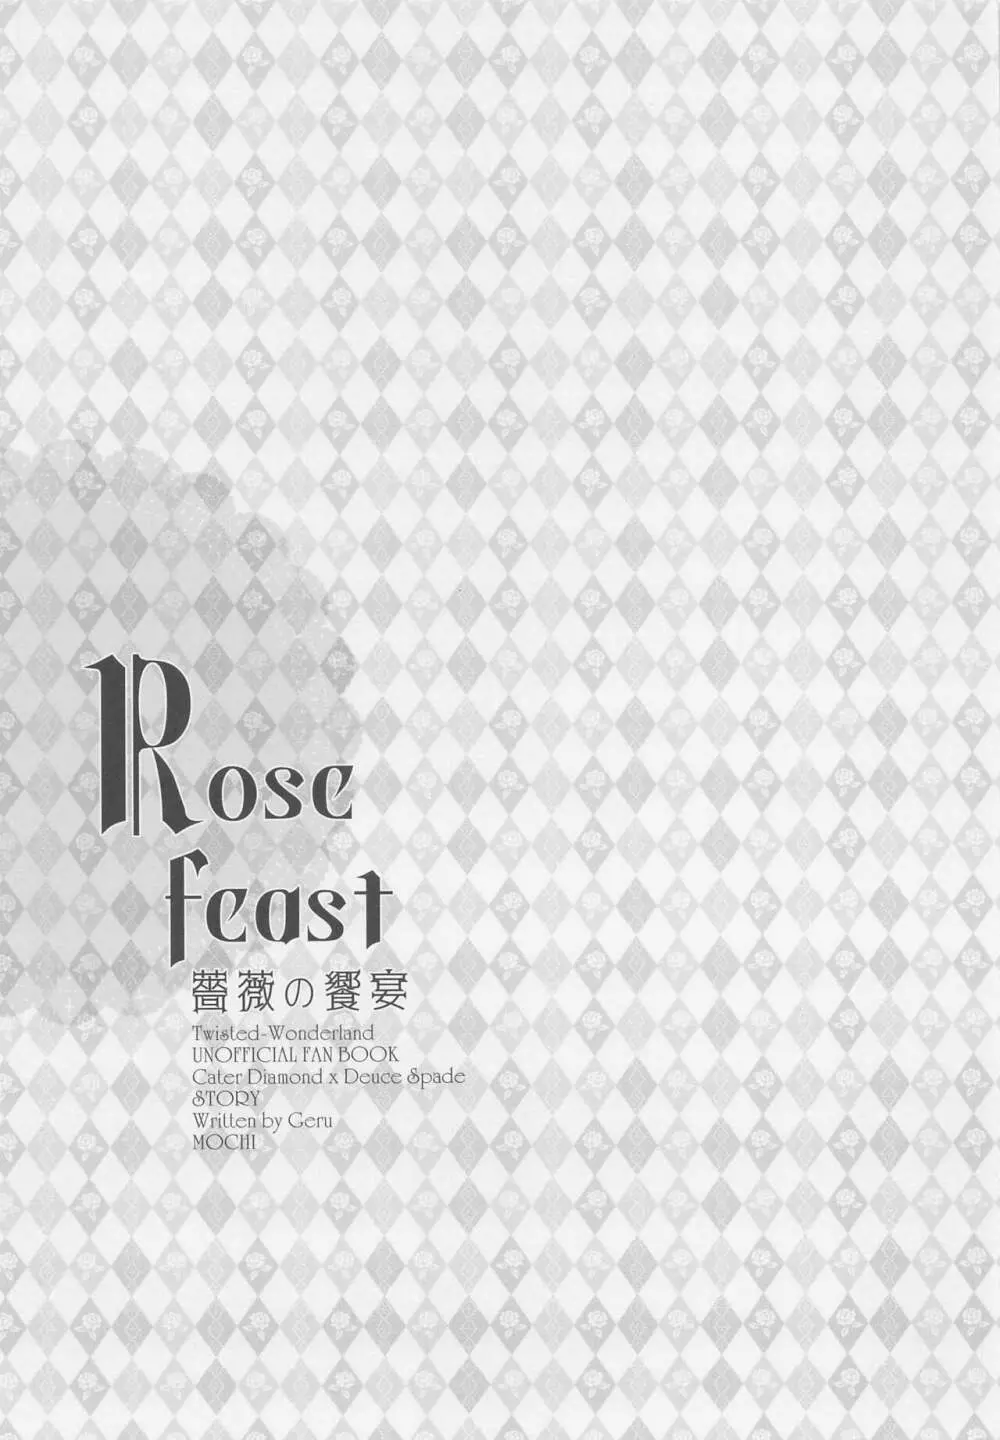 Rose feast 薔薇の饗宴 2ページ